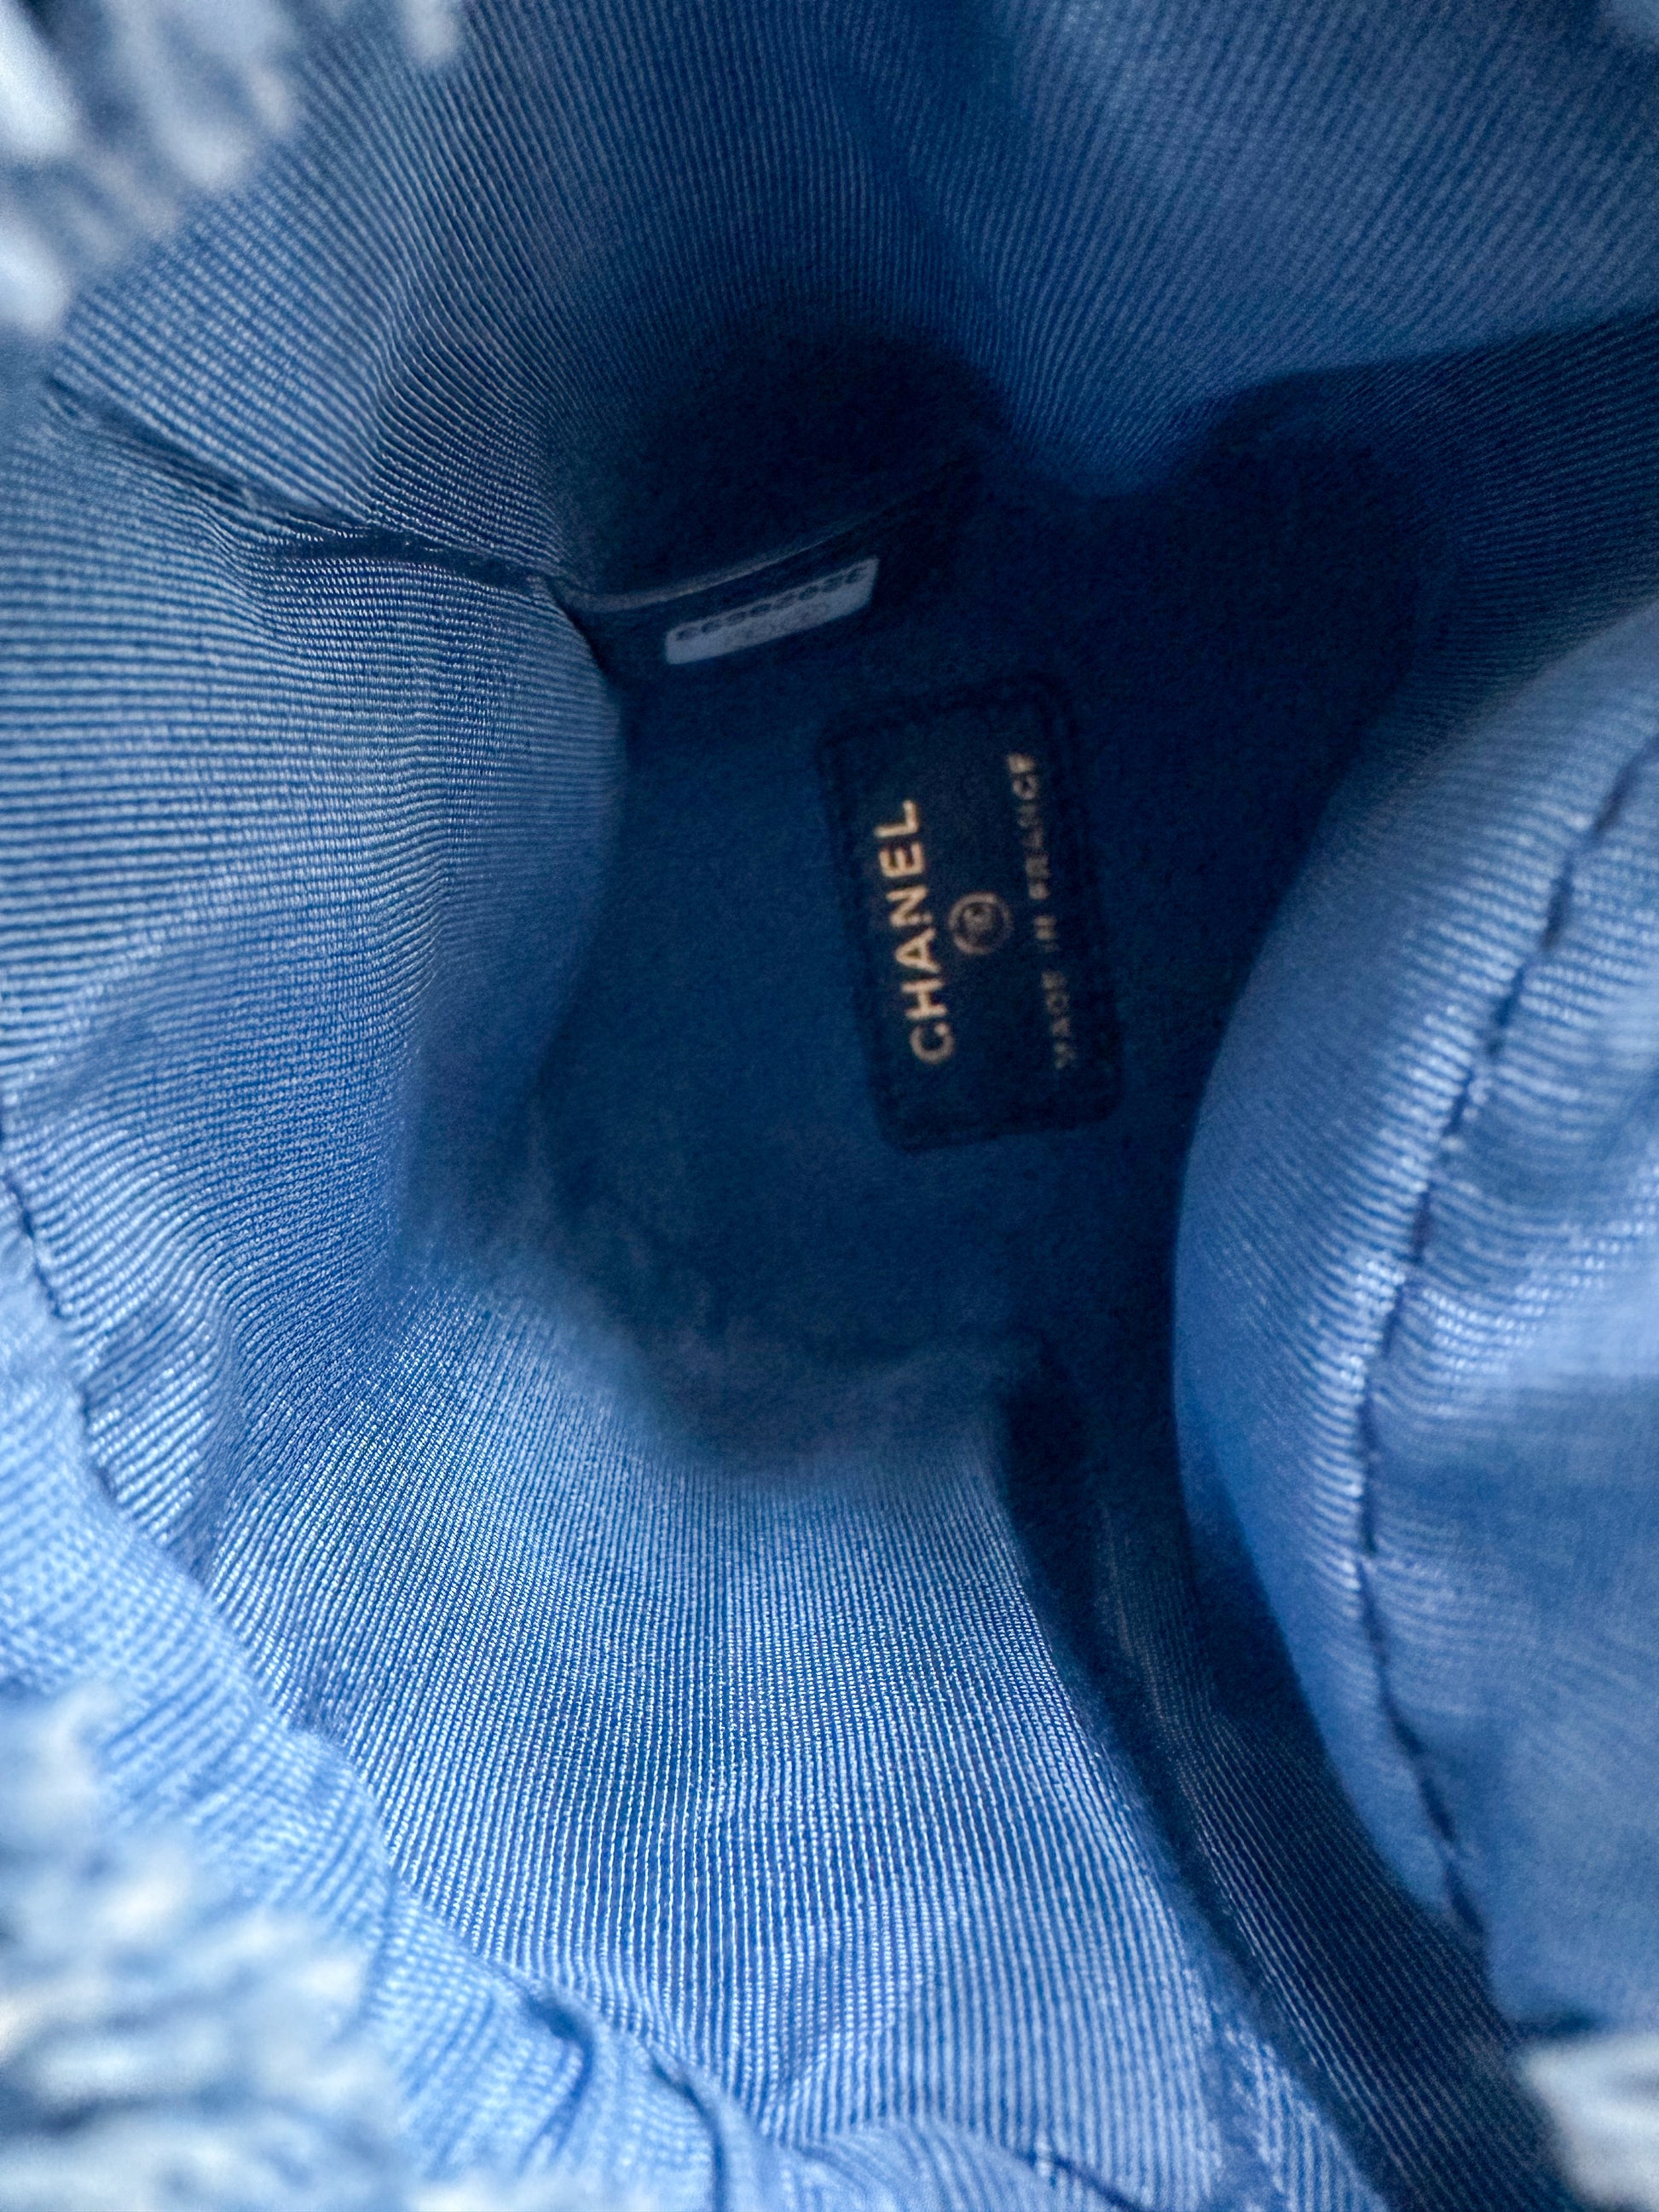 Chanel Blue Denim Drawstring Bucket Bag